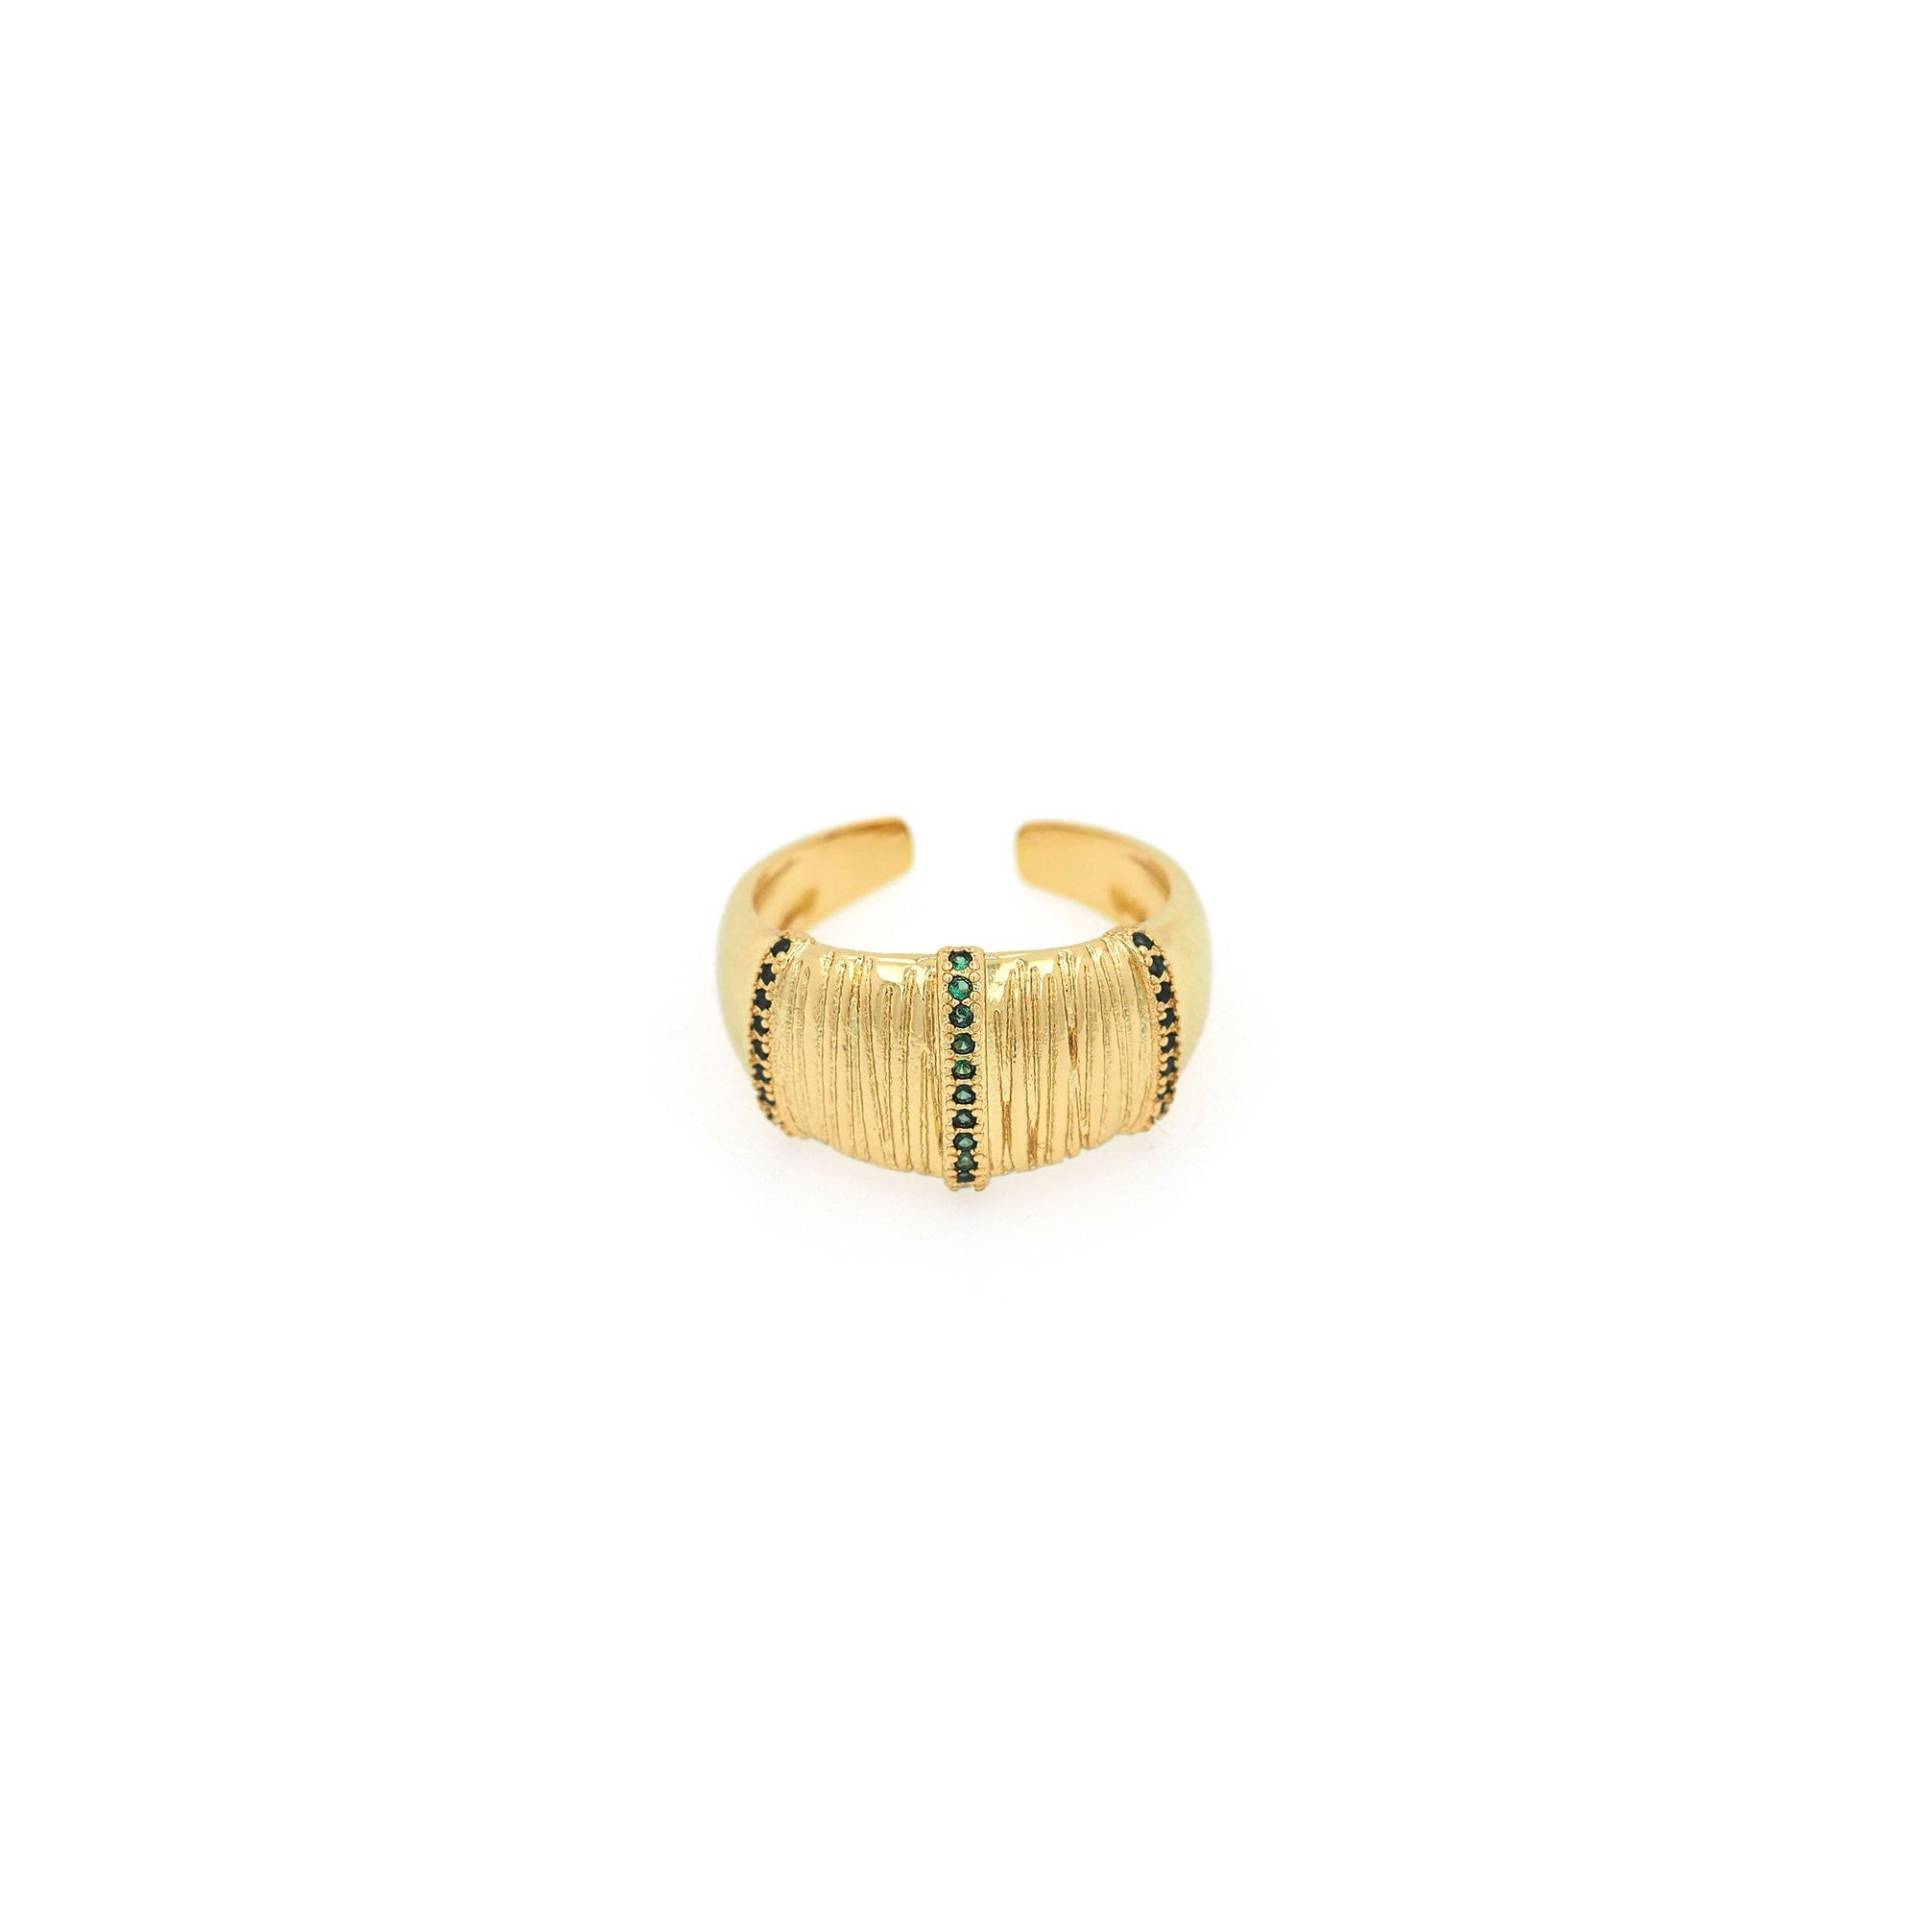 18K Gold Filled Breitband Ring, Micro Paved Zirkon Textur Signet Mode Unisex von Antholny